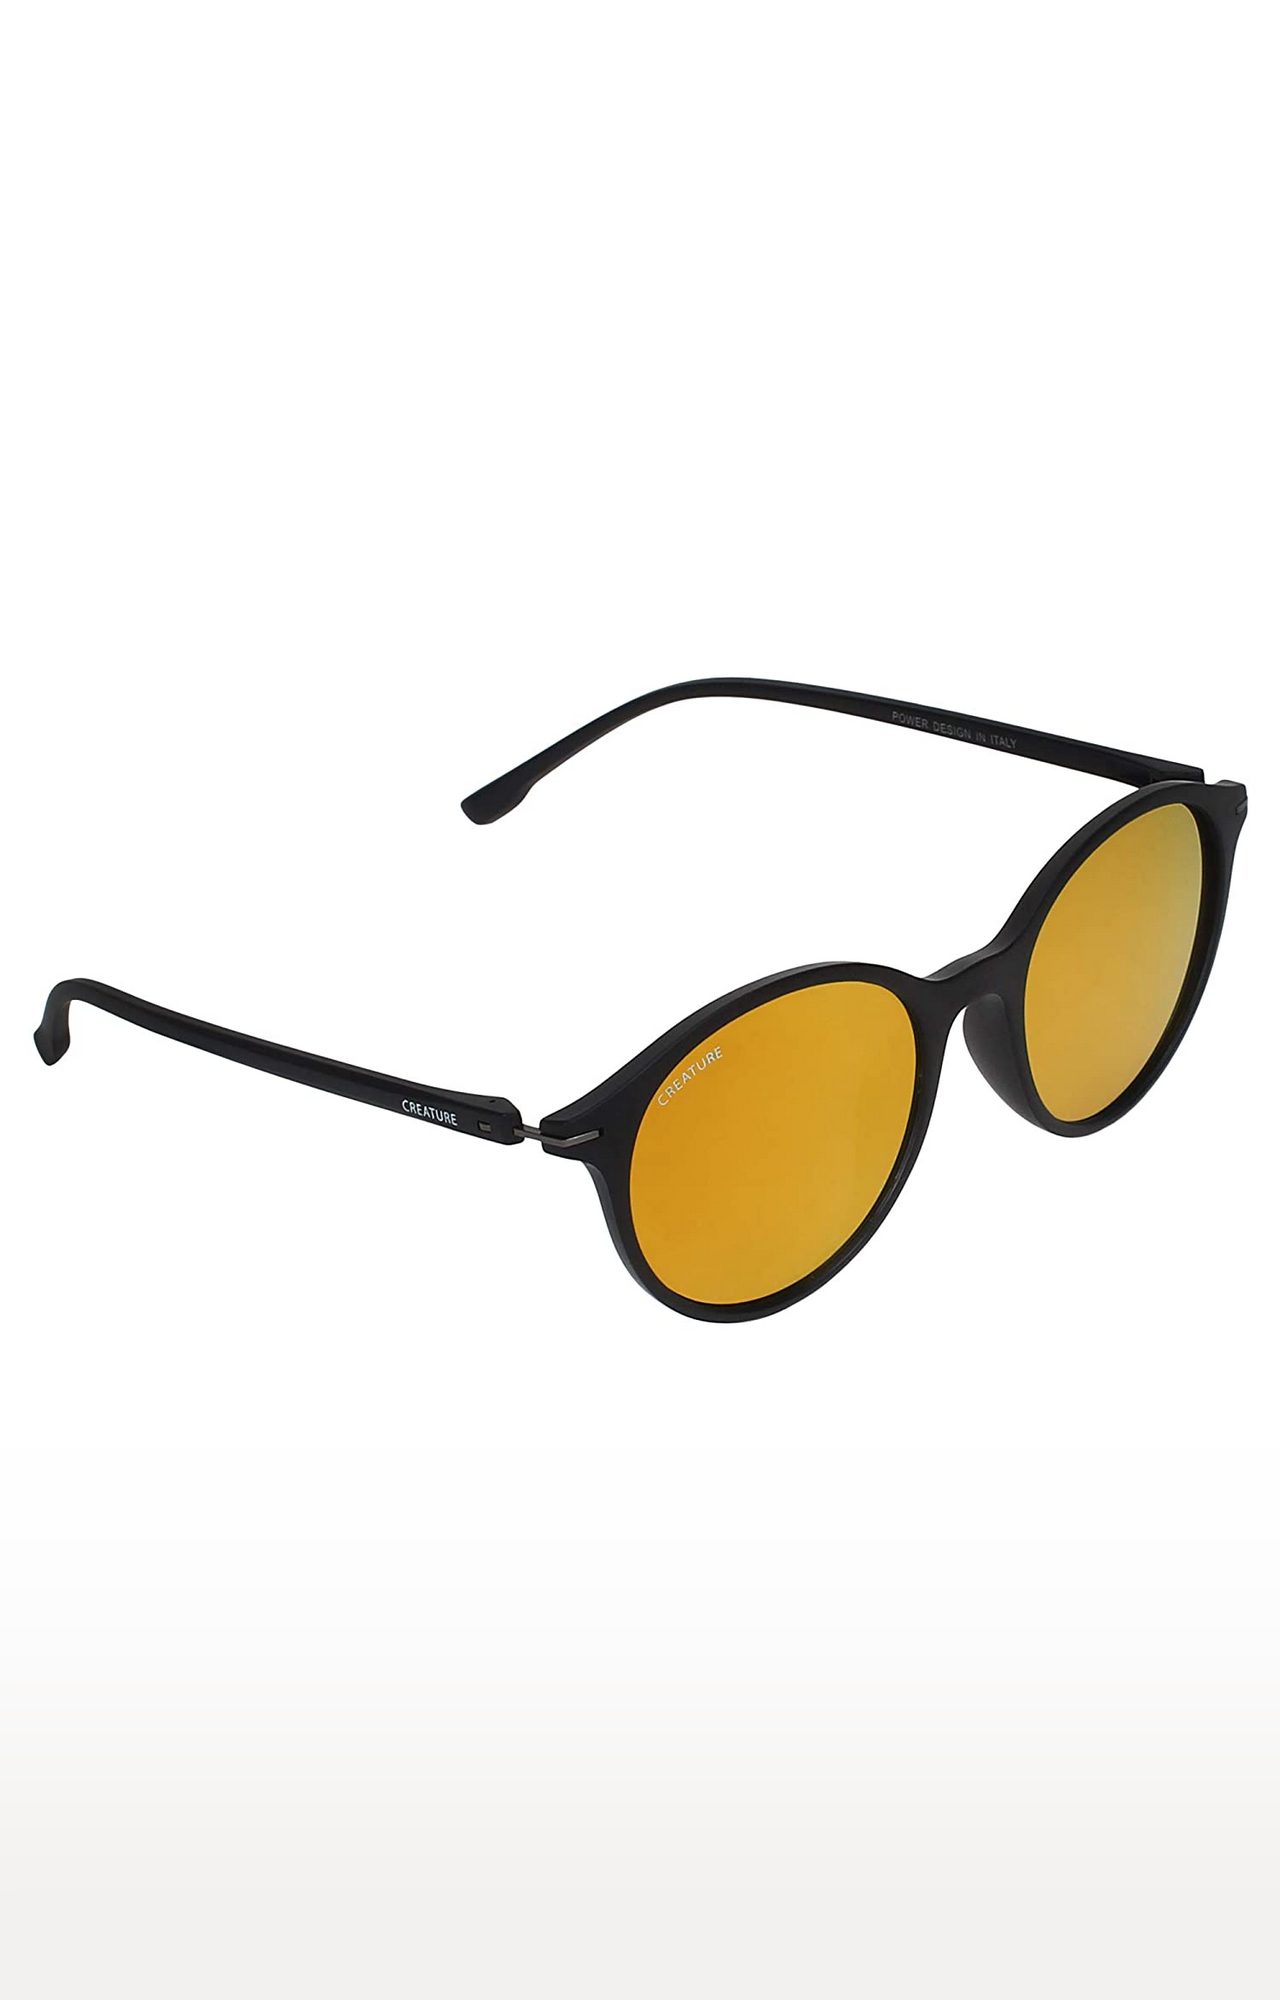 CREATURE | CREATURE Matt Finish Club Master Round UV Protected Unisex Sunglasses (Lens-Yellow|Frame-Black) 0